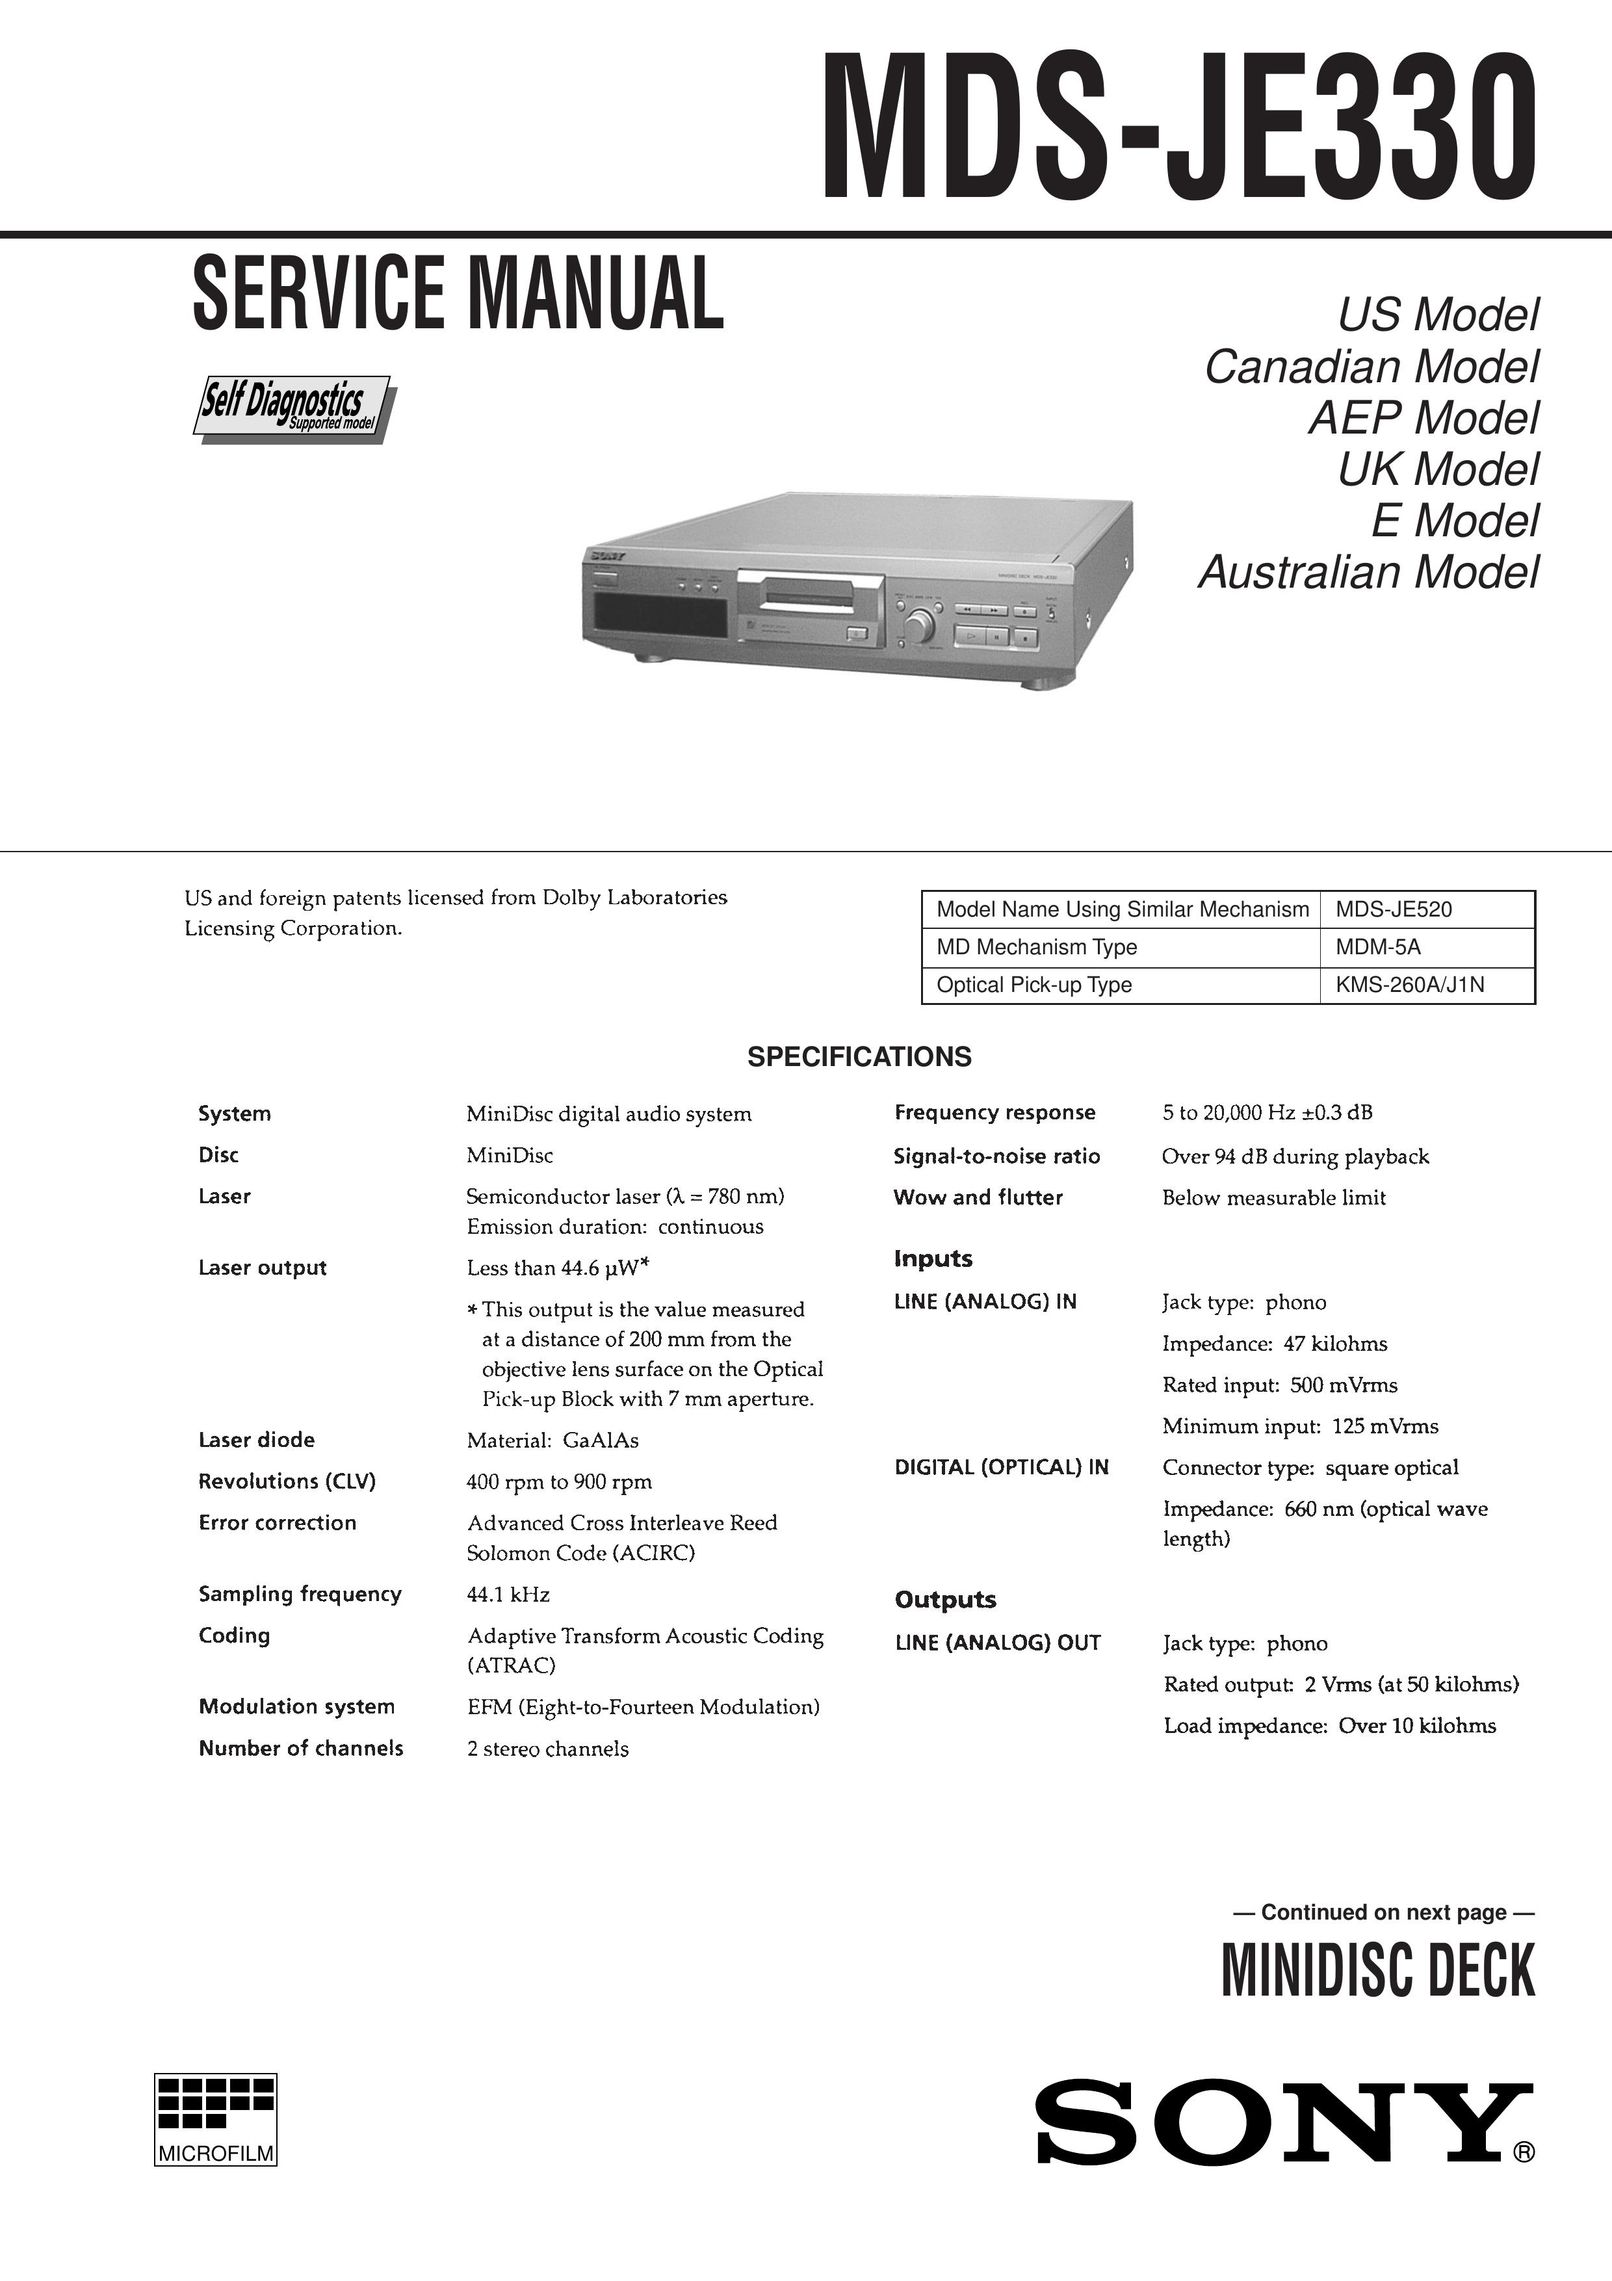 Sony 4-216-349-5 DVD Player User Manual